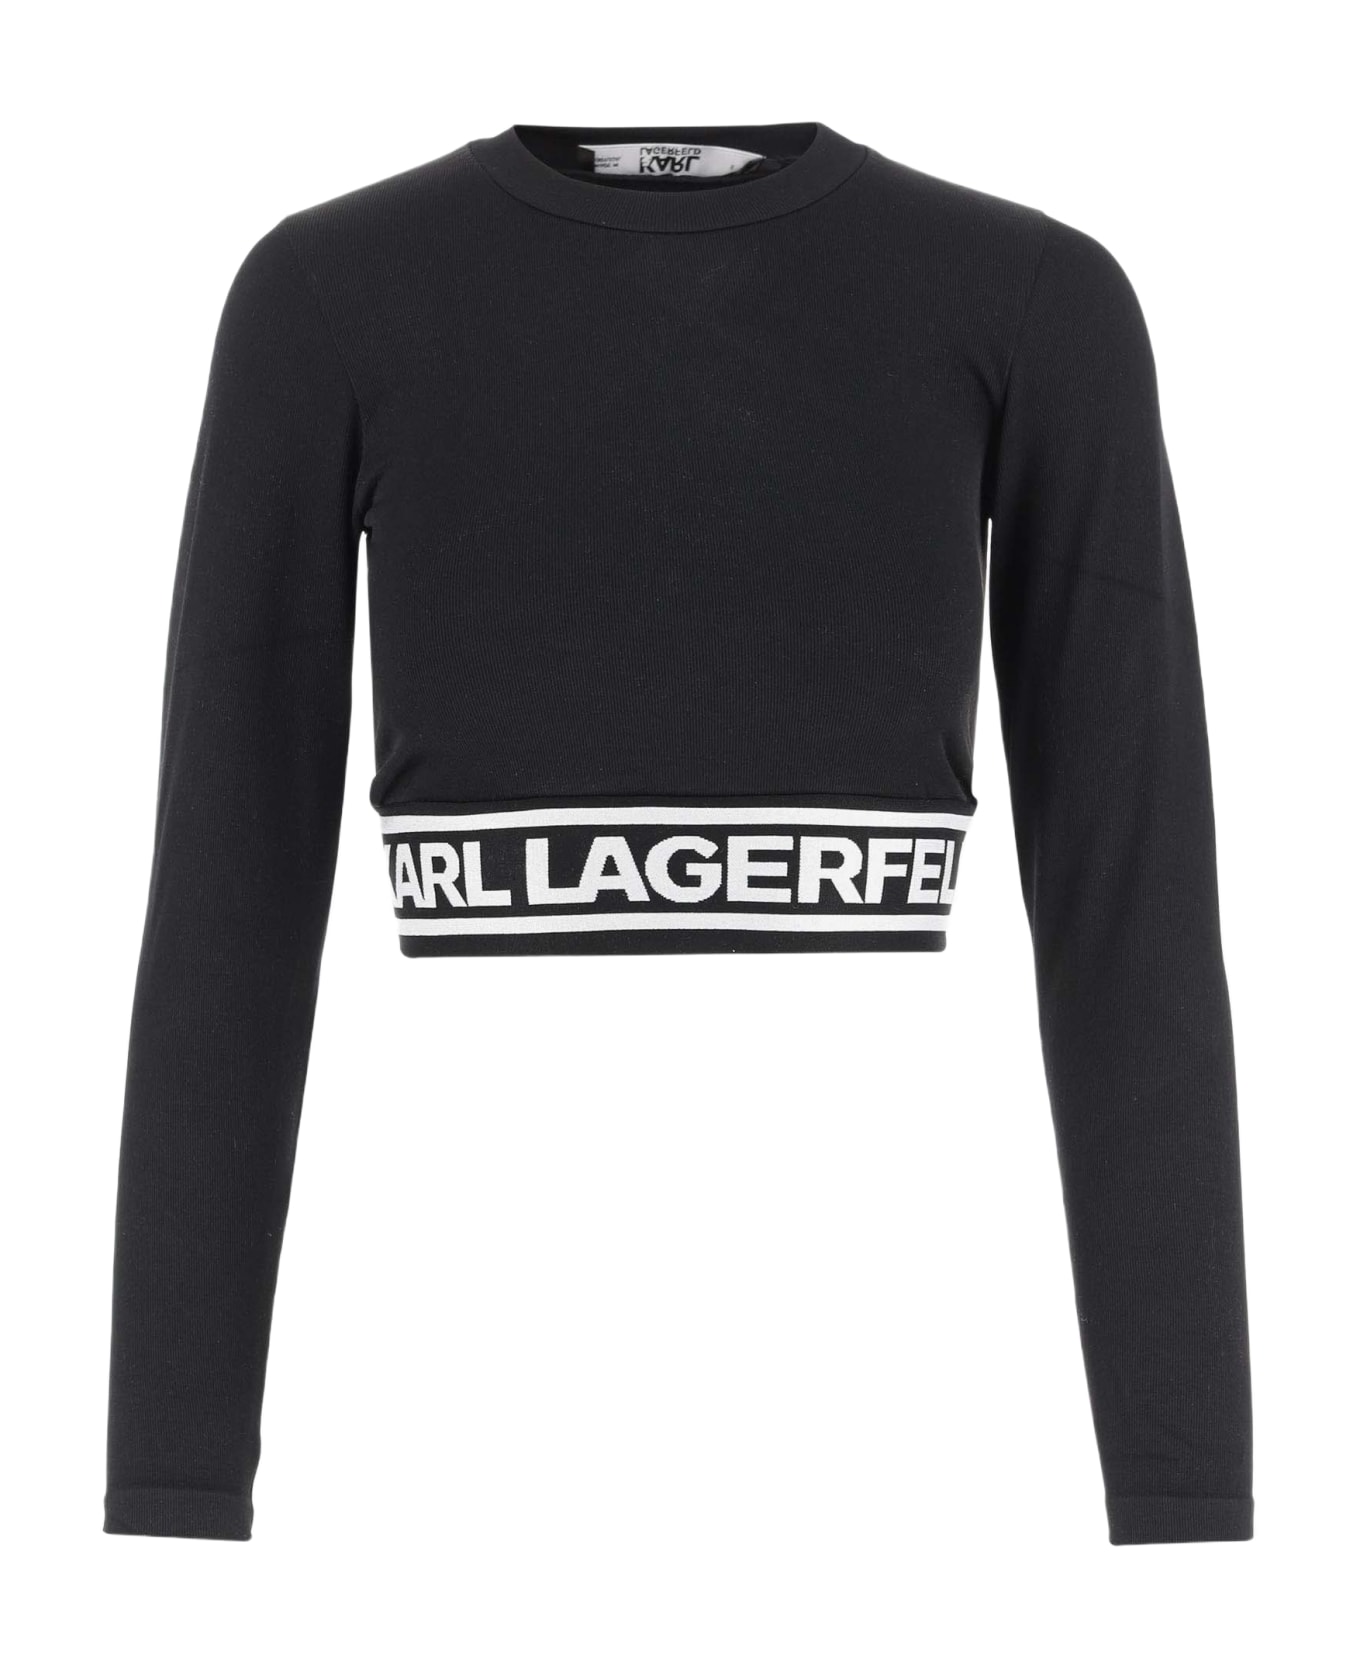 Karl Lagerfeld Stretch Acrylic Crop Top - Black タンクトップ